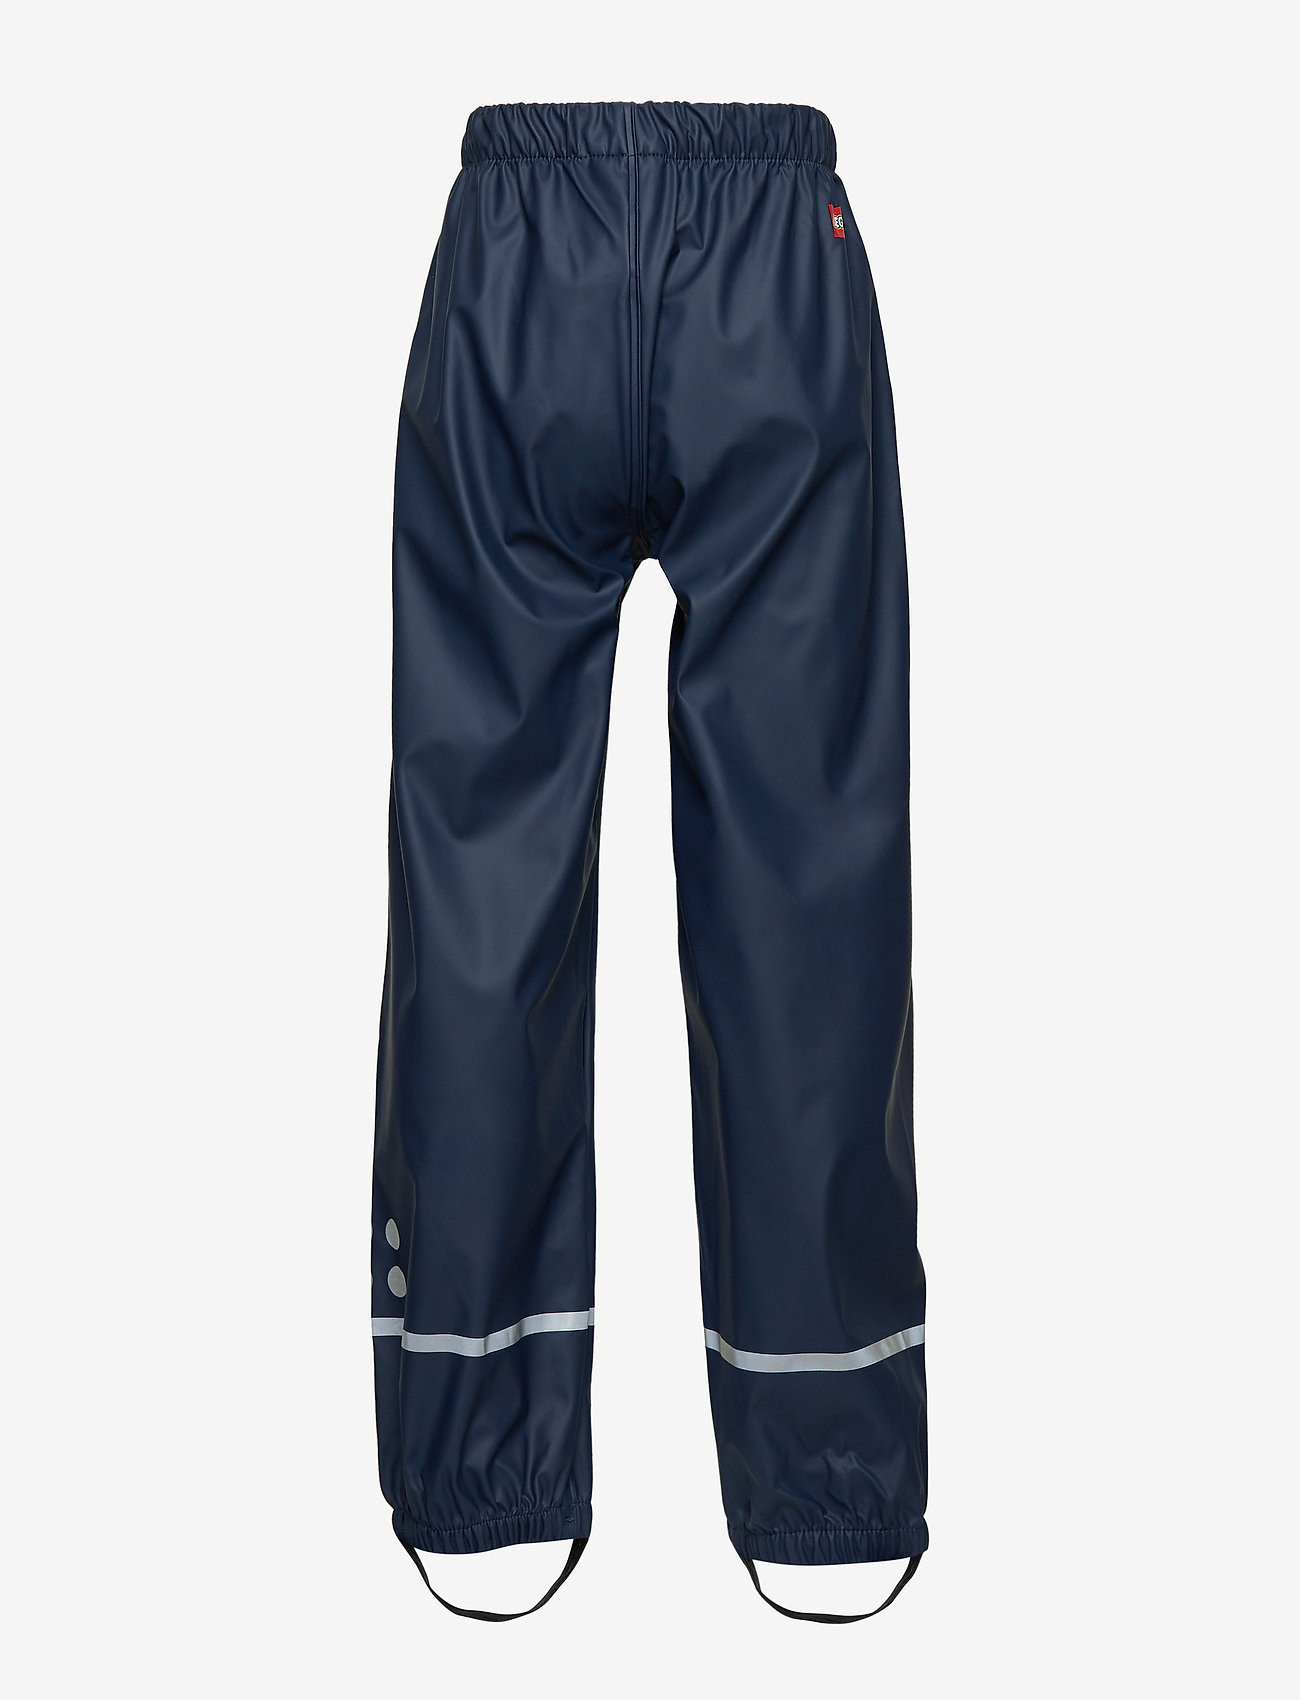 LEGO kidswear - PUCK 101 - RAIN PANTS - rain trousers - dark navy - 1